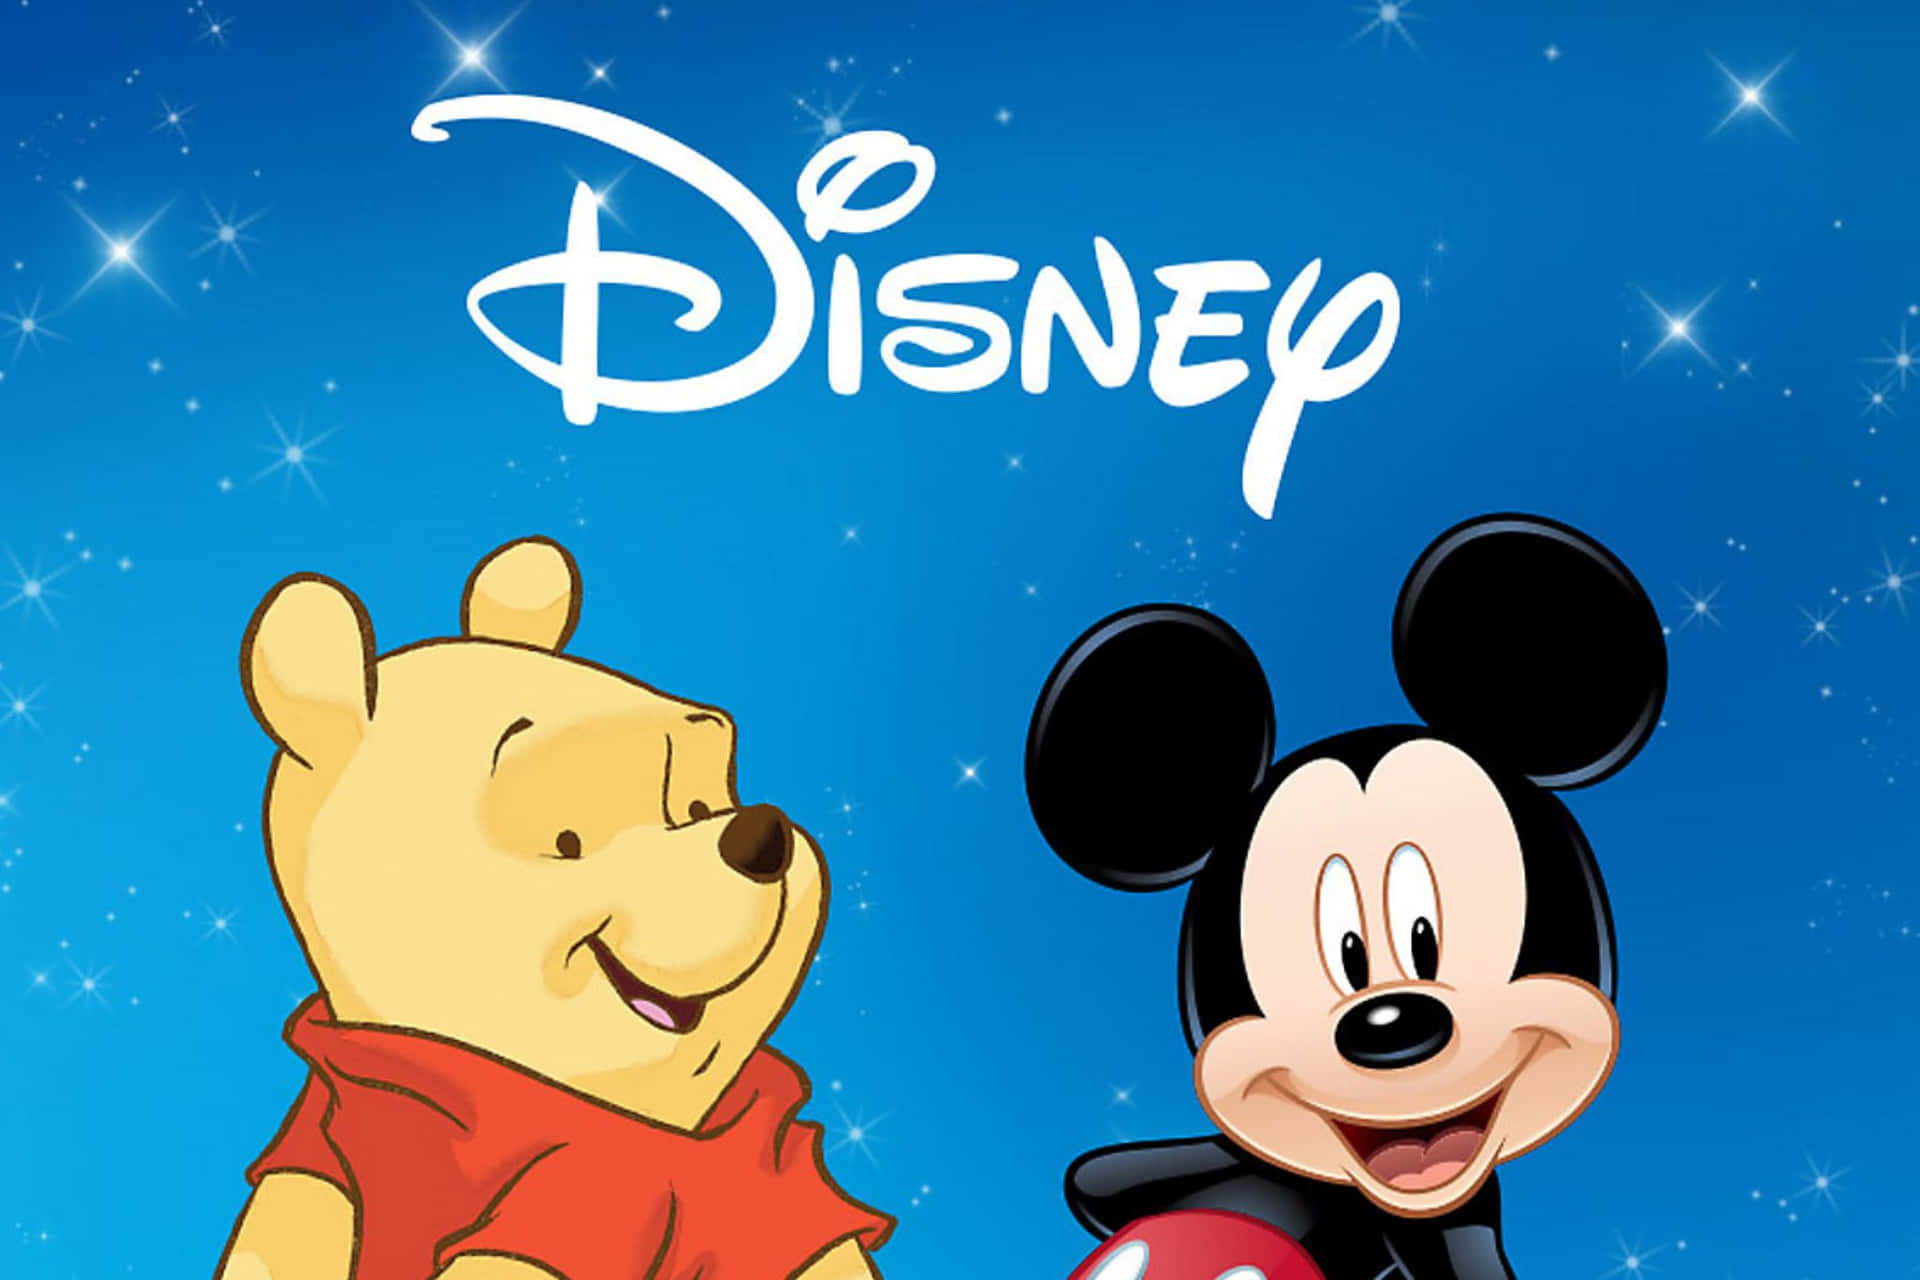 Disney Mickeyand Pooh Starry Backdrop Wallpaper